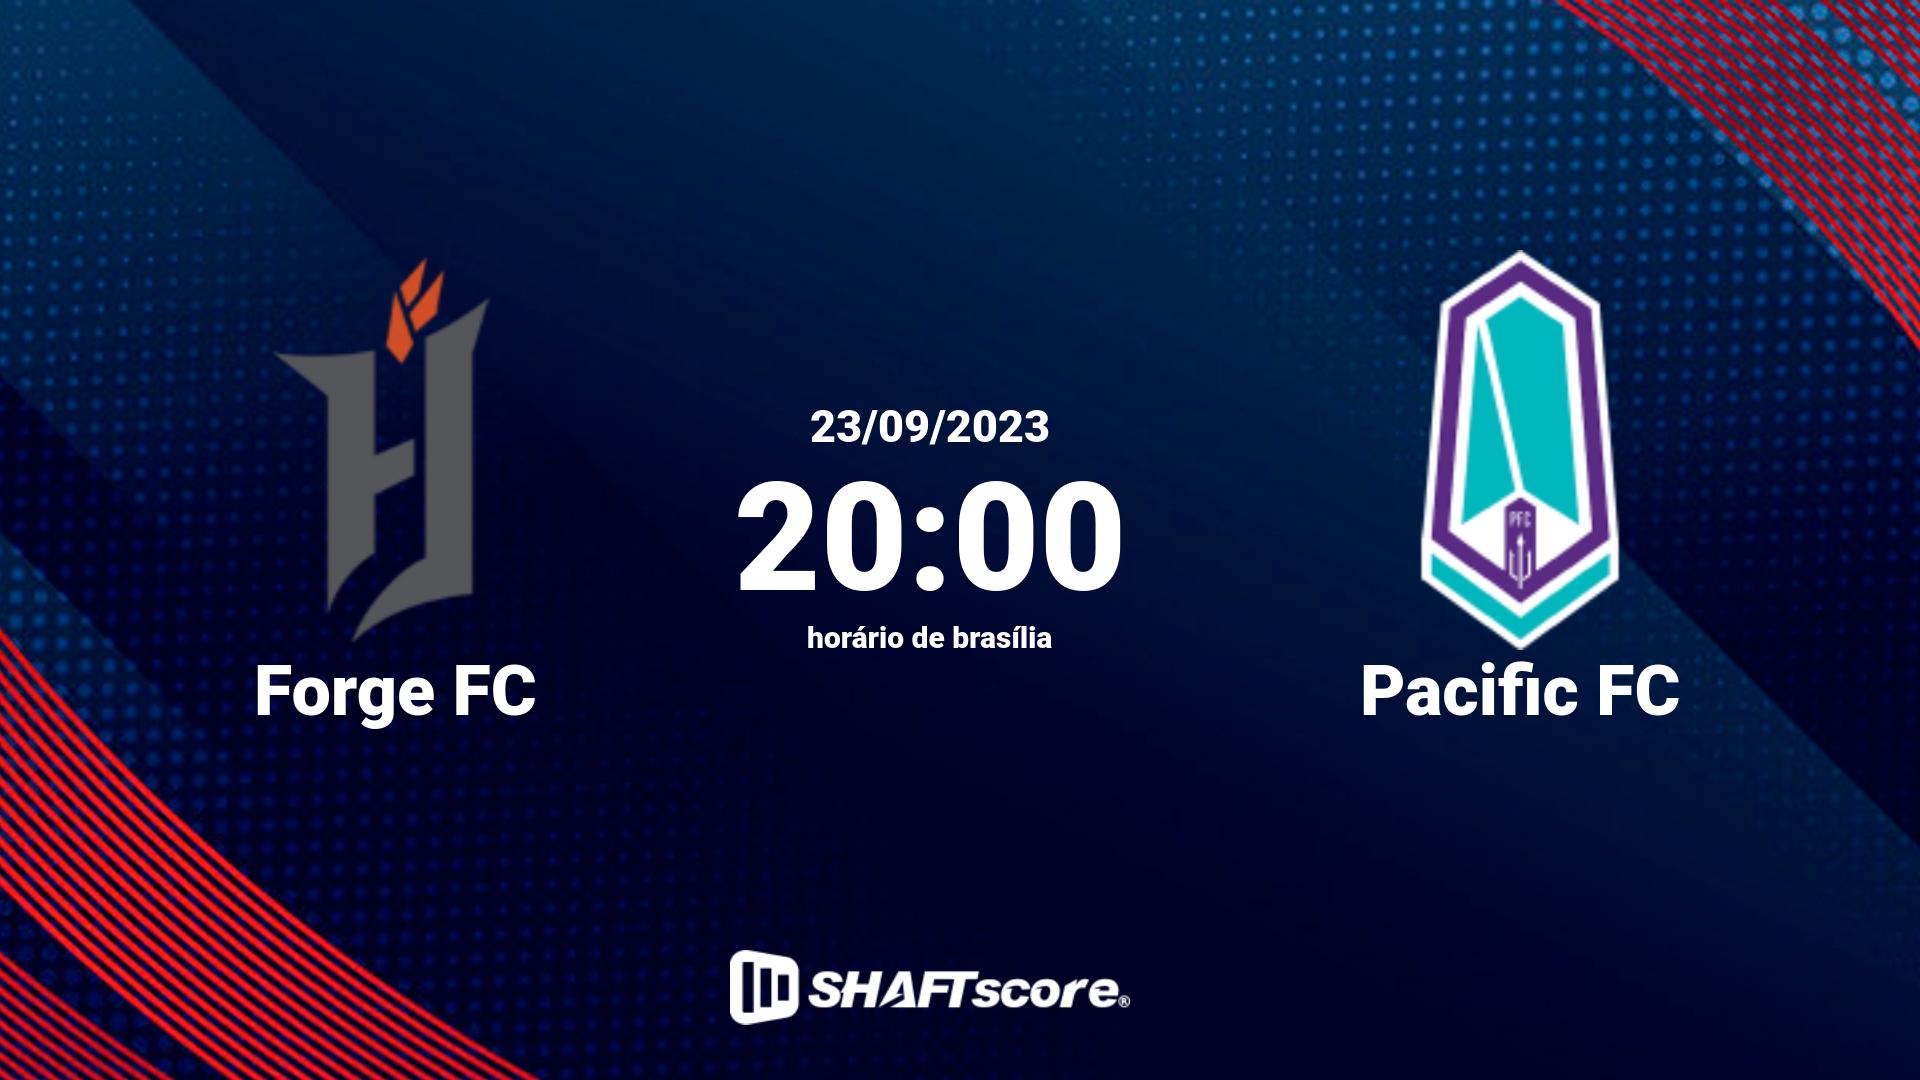 Estatísticas do jogo Forge FC vs Pacific FC 23.09 20:00